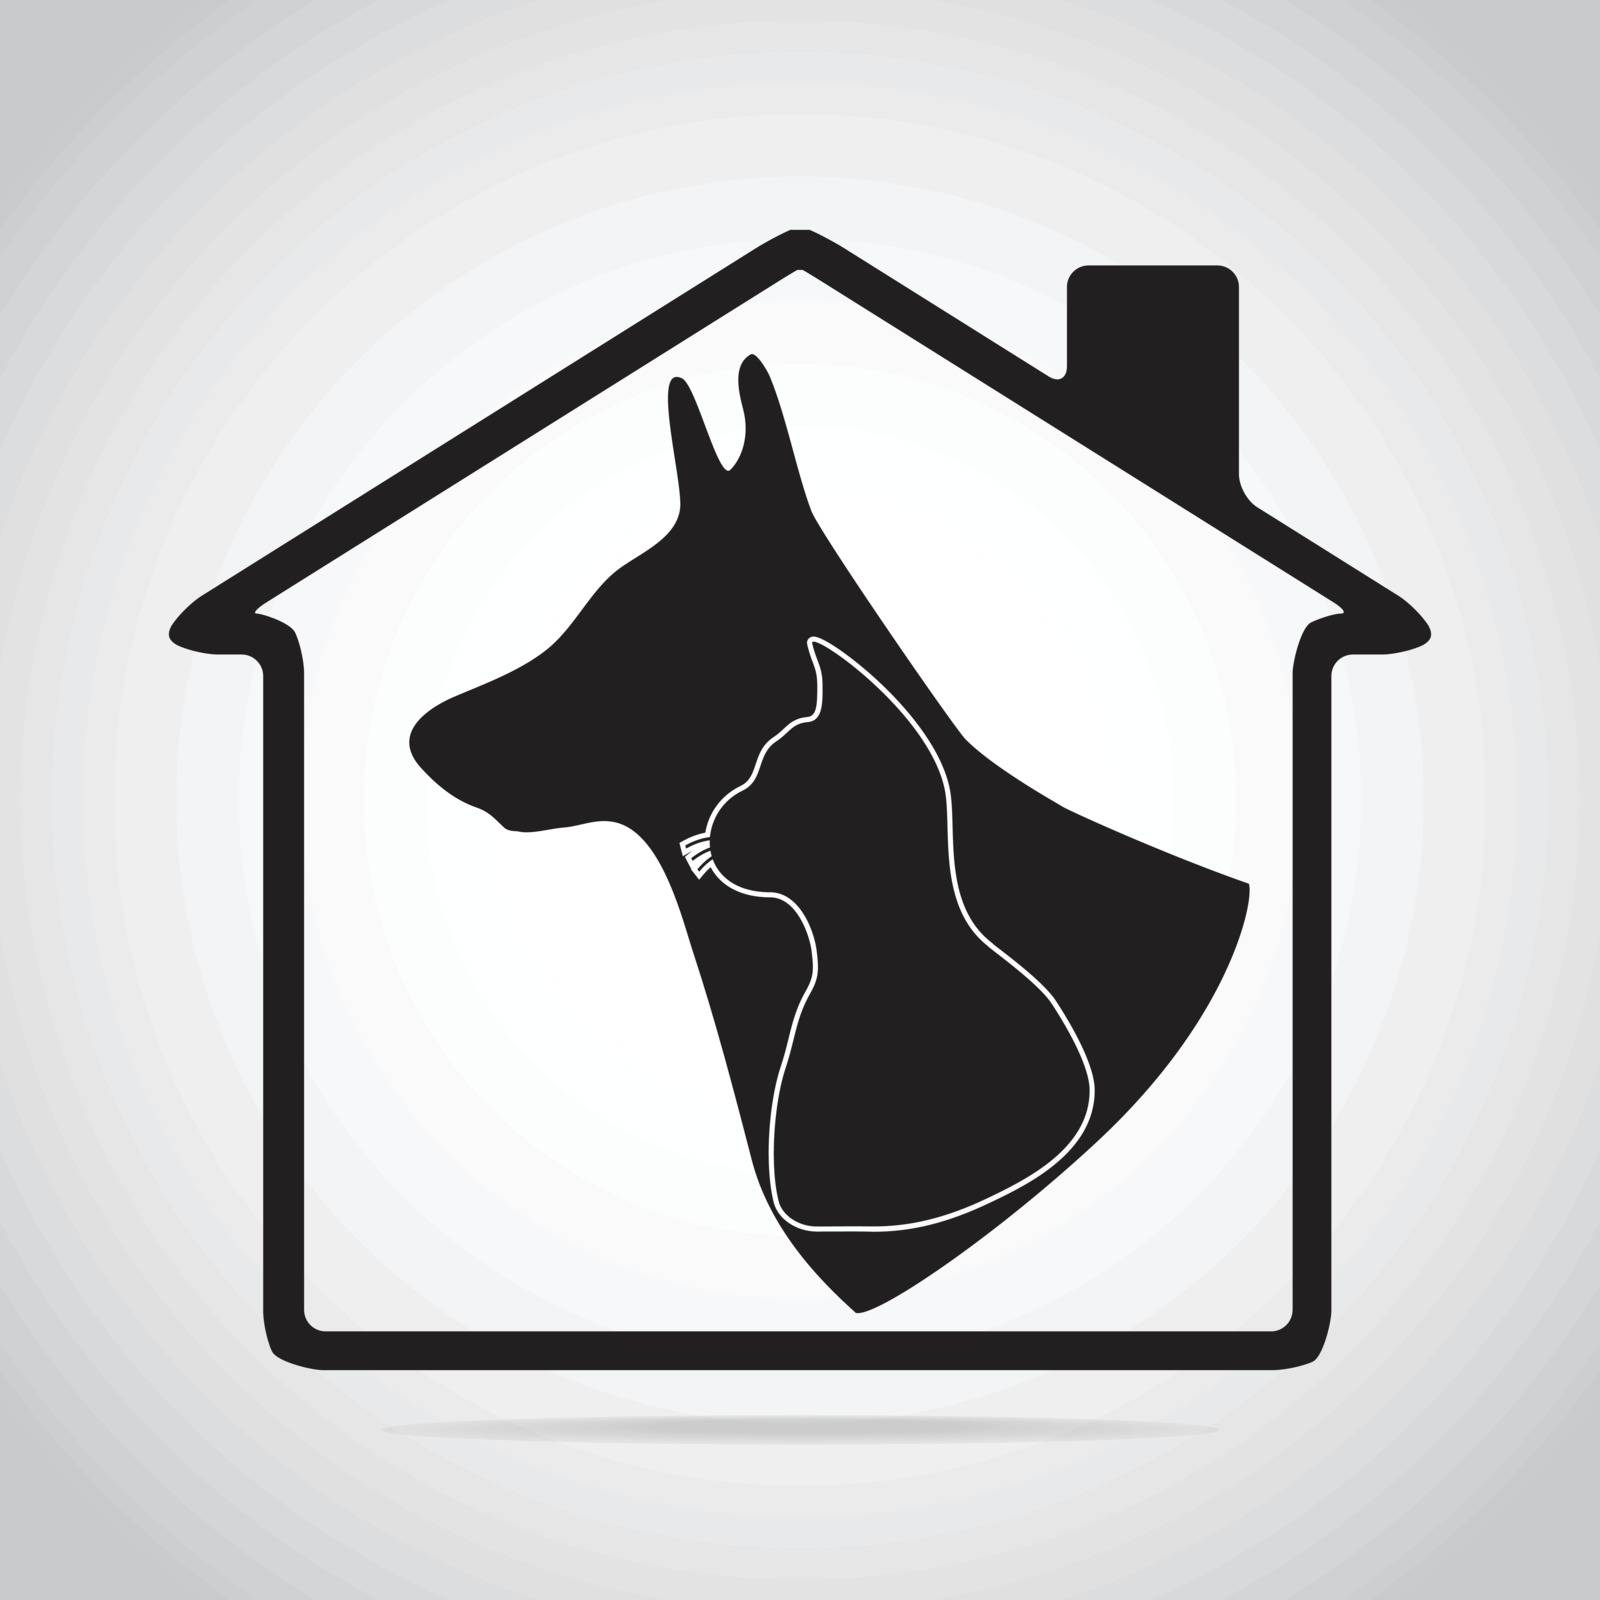 Pet home icon, animal house icon illustration